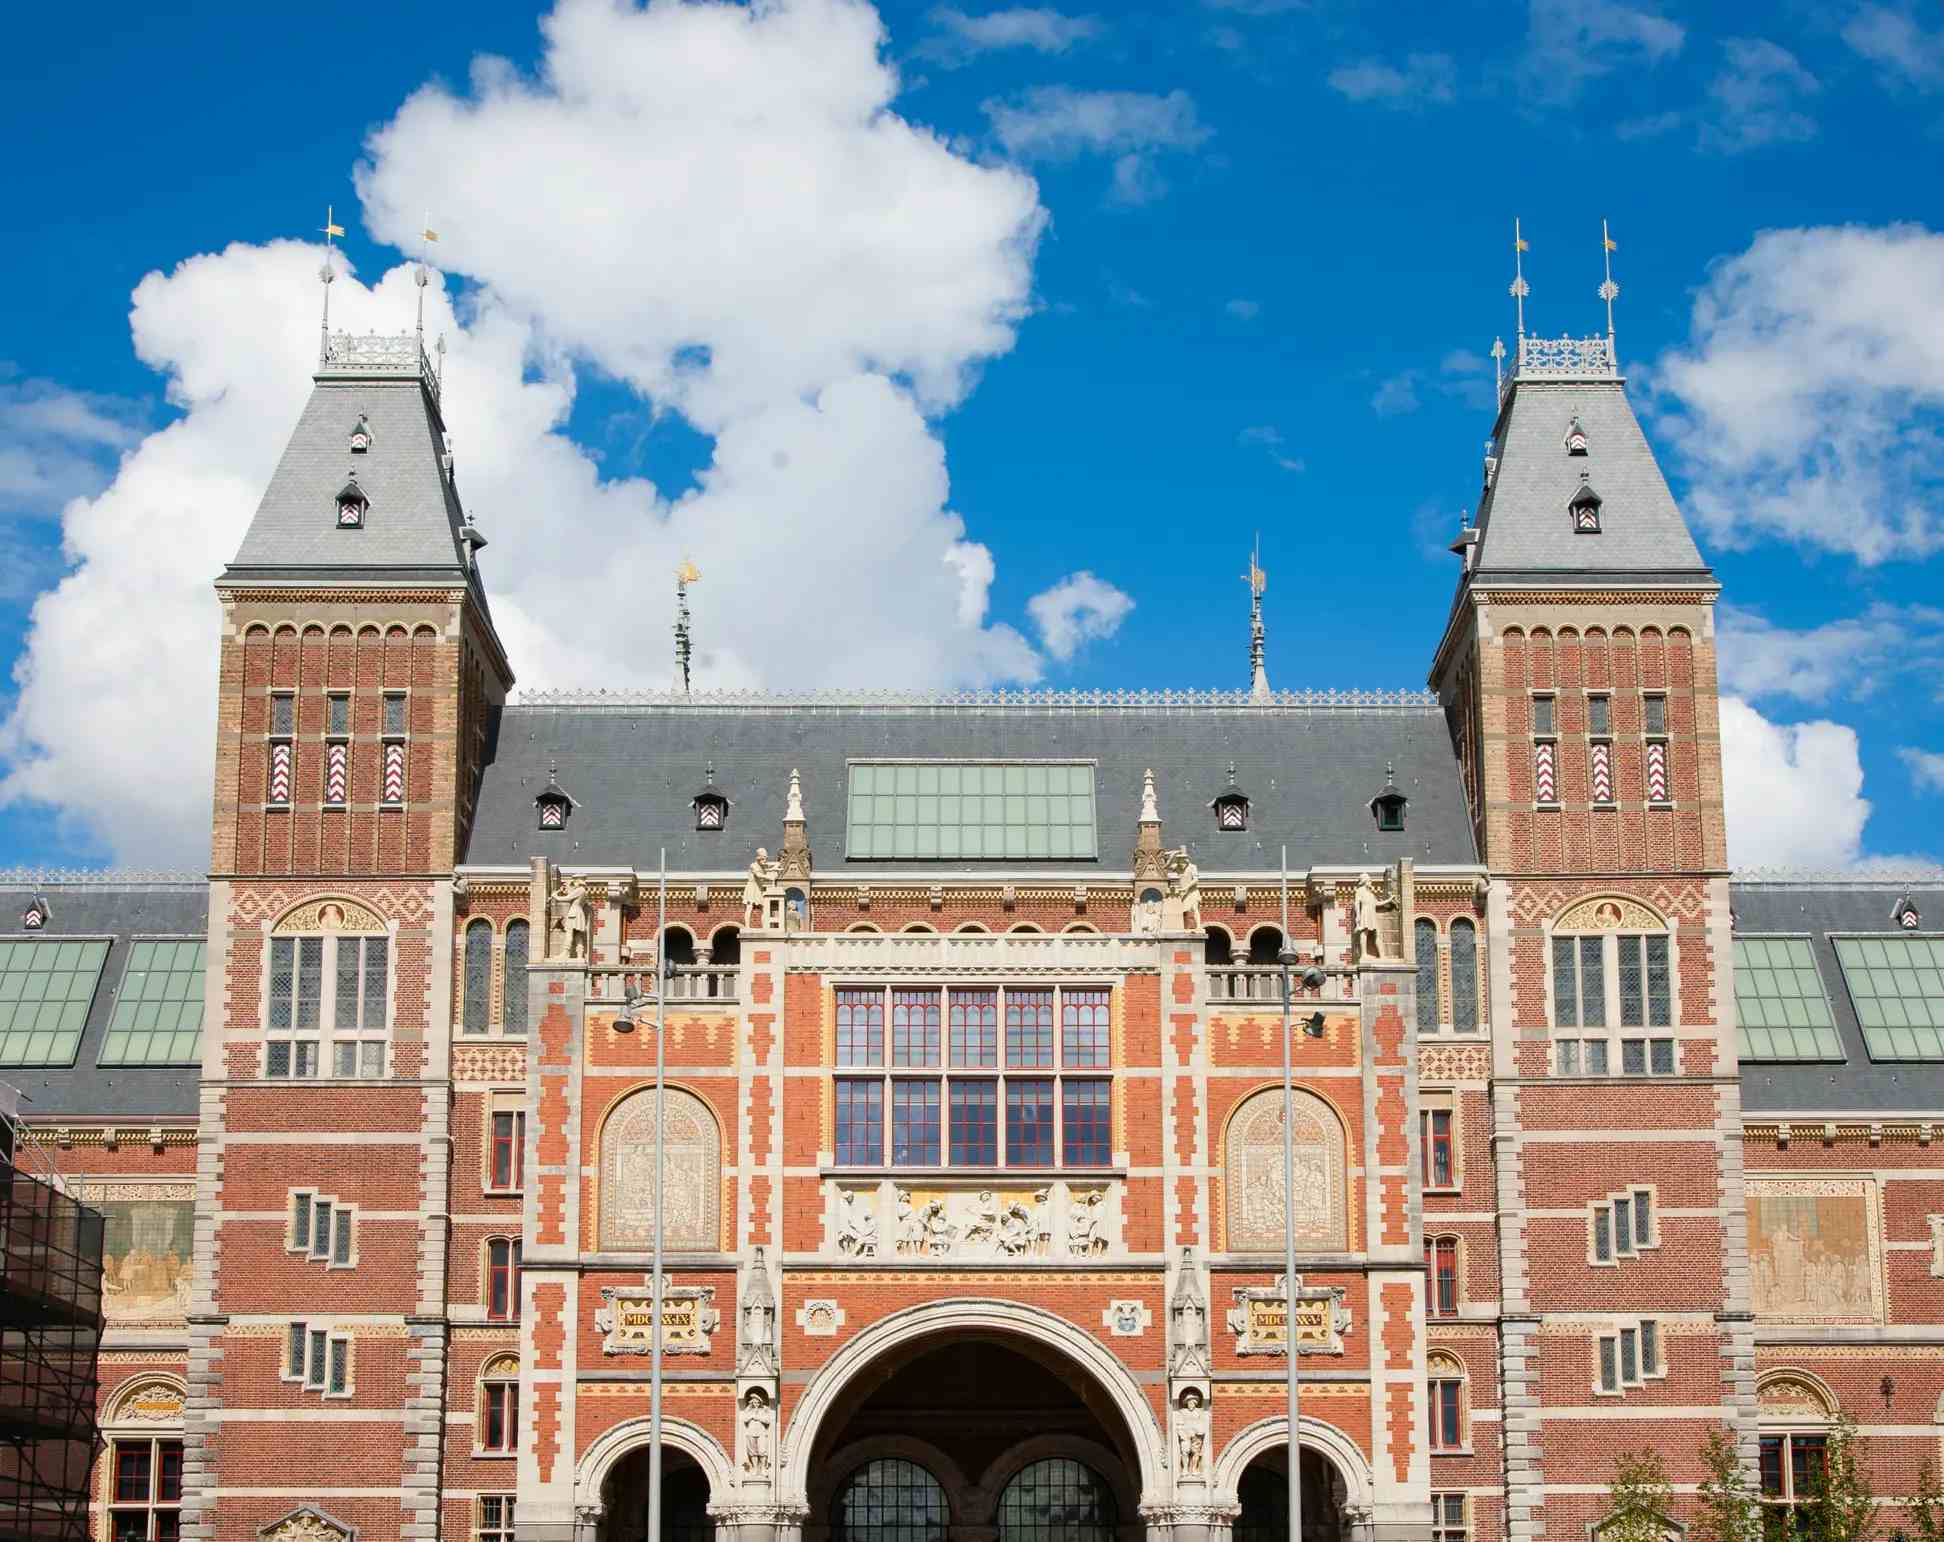 Rijksmuseum image